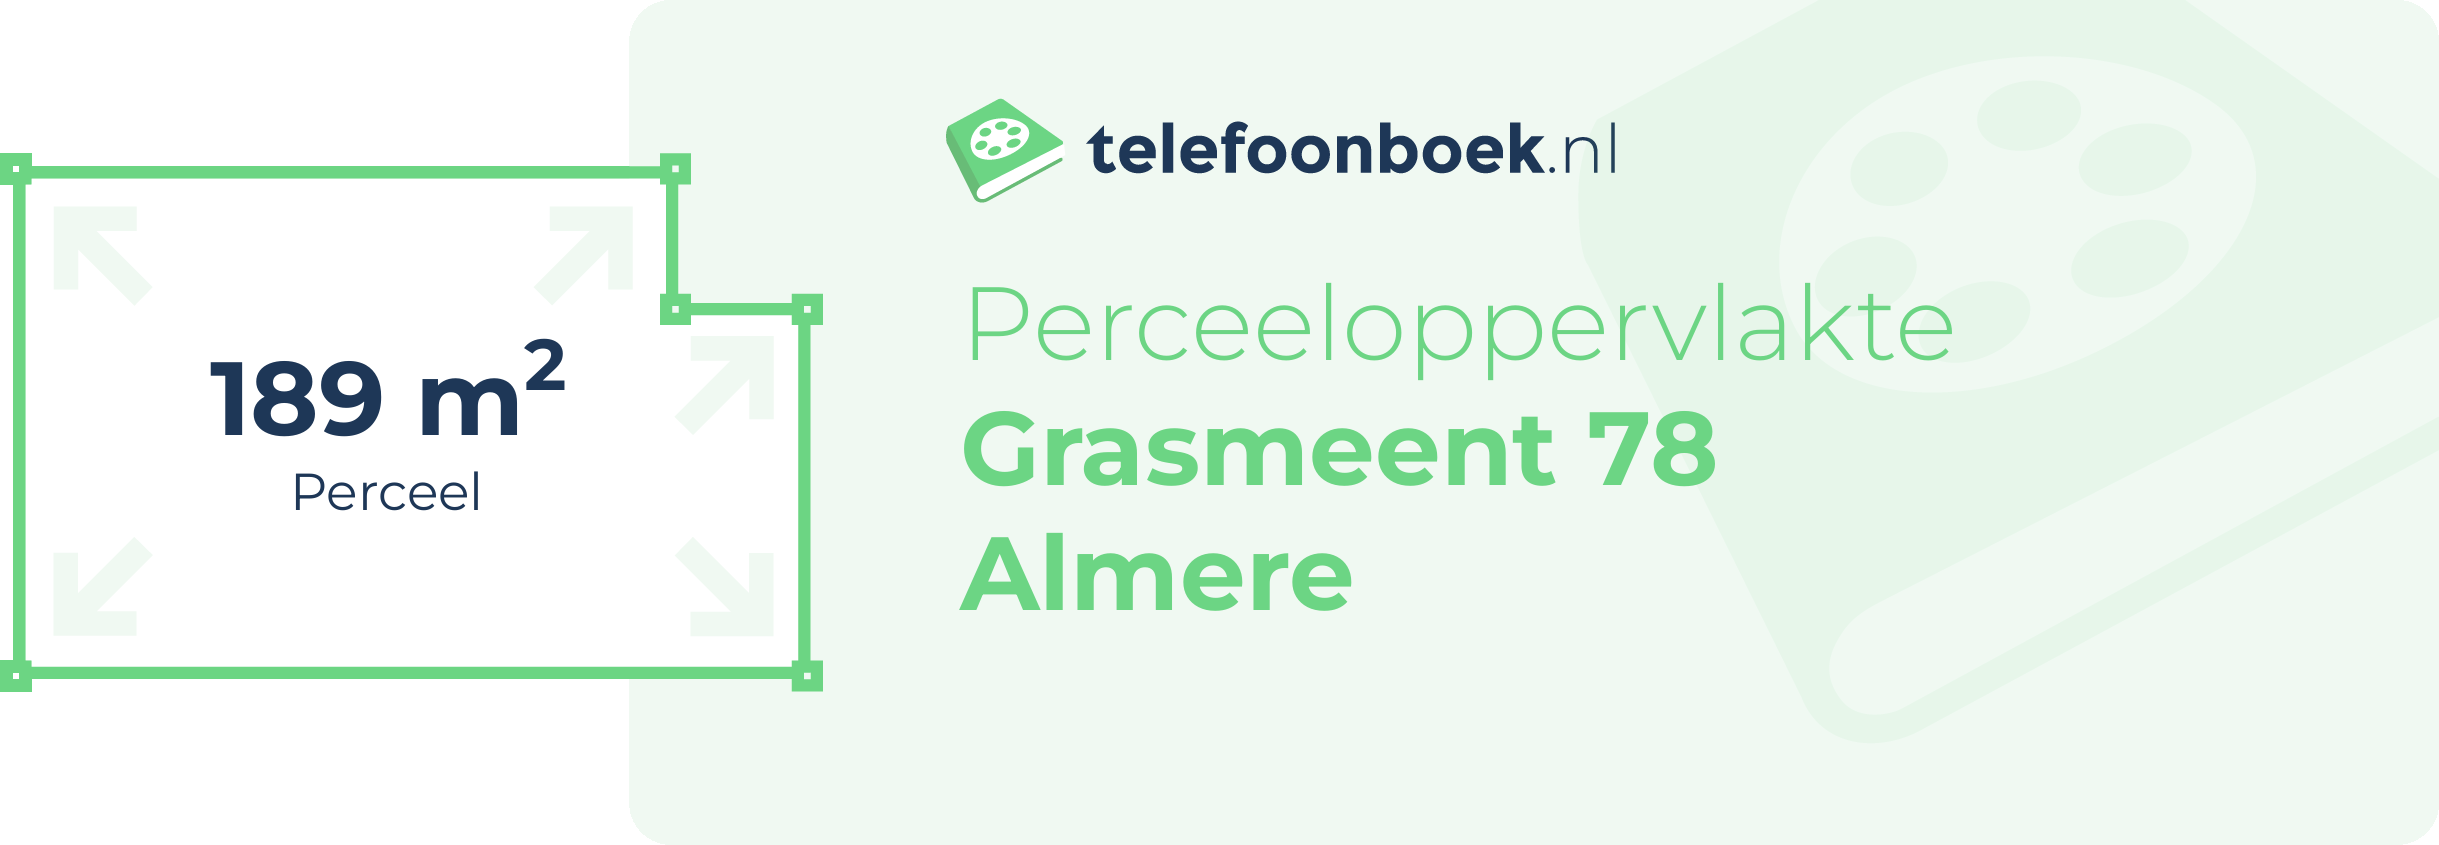 Perceeloppervlakte Grasmeent 78 Almere